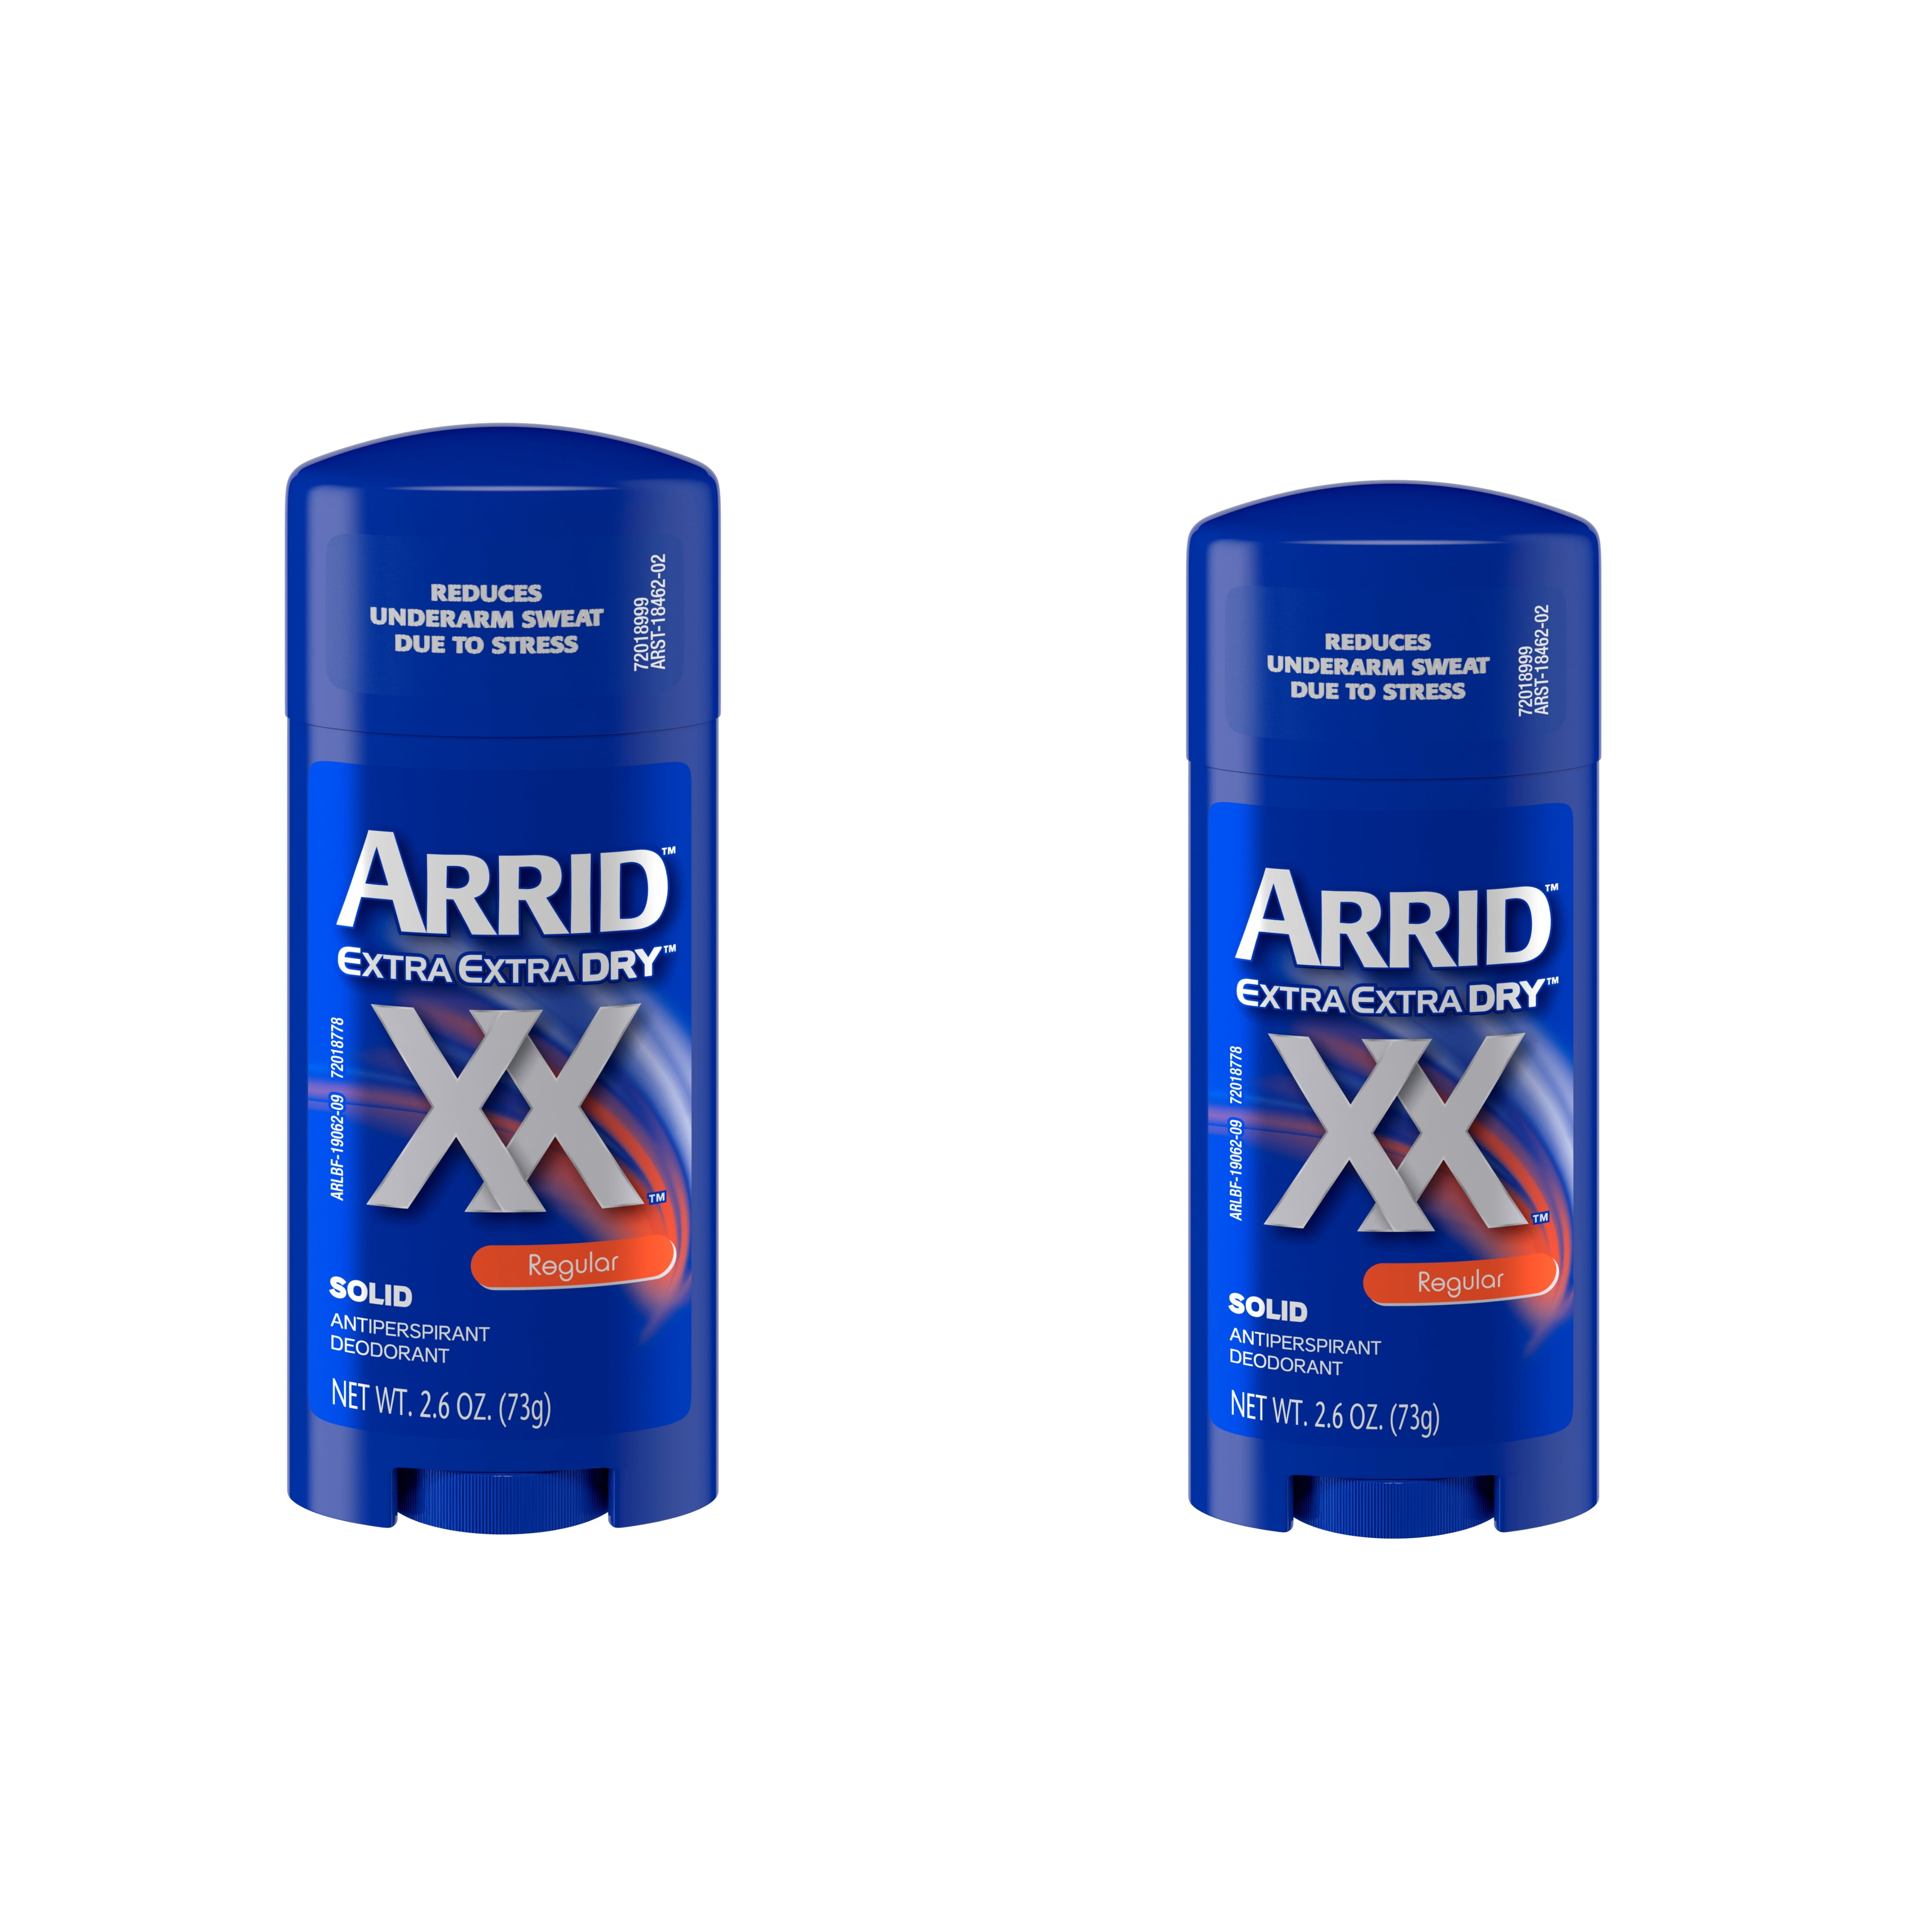 ARRID XX Anti-Perspirant Deodorant Solid Regular 2.6 oz (Pack of 2)